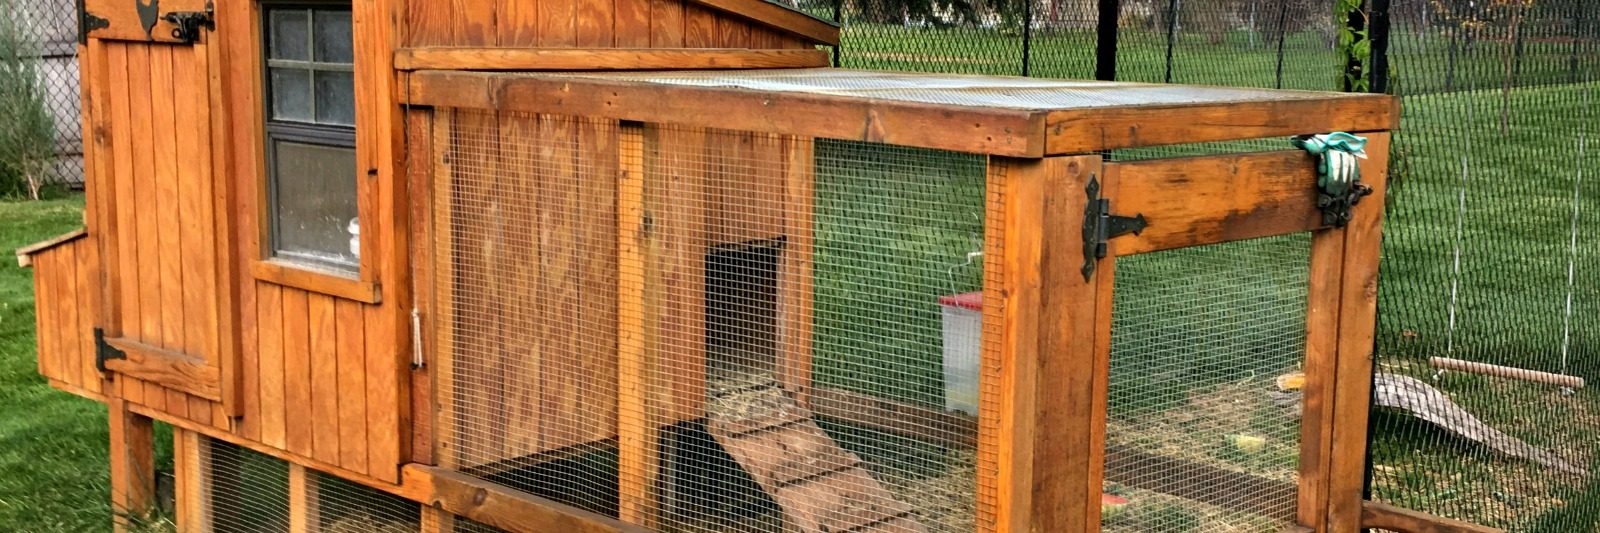 Raising chickens Montana Homesteader